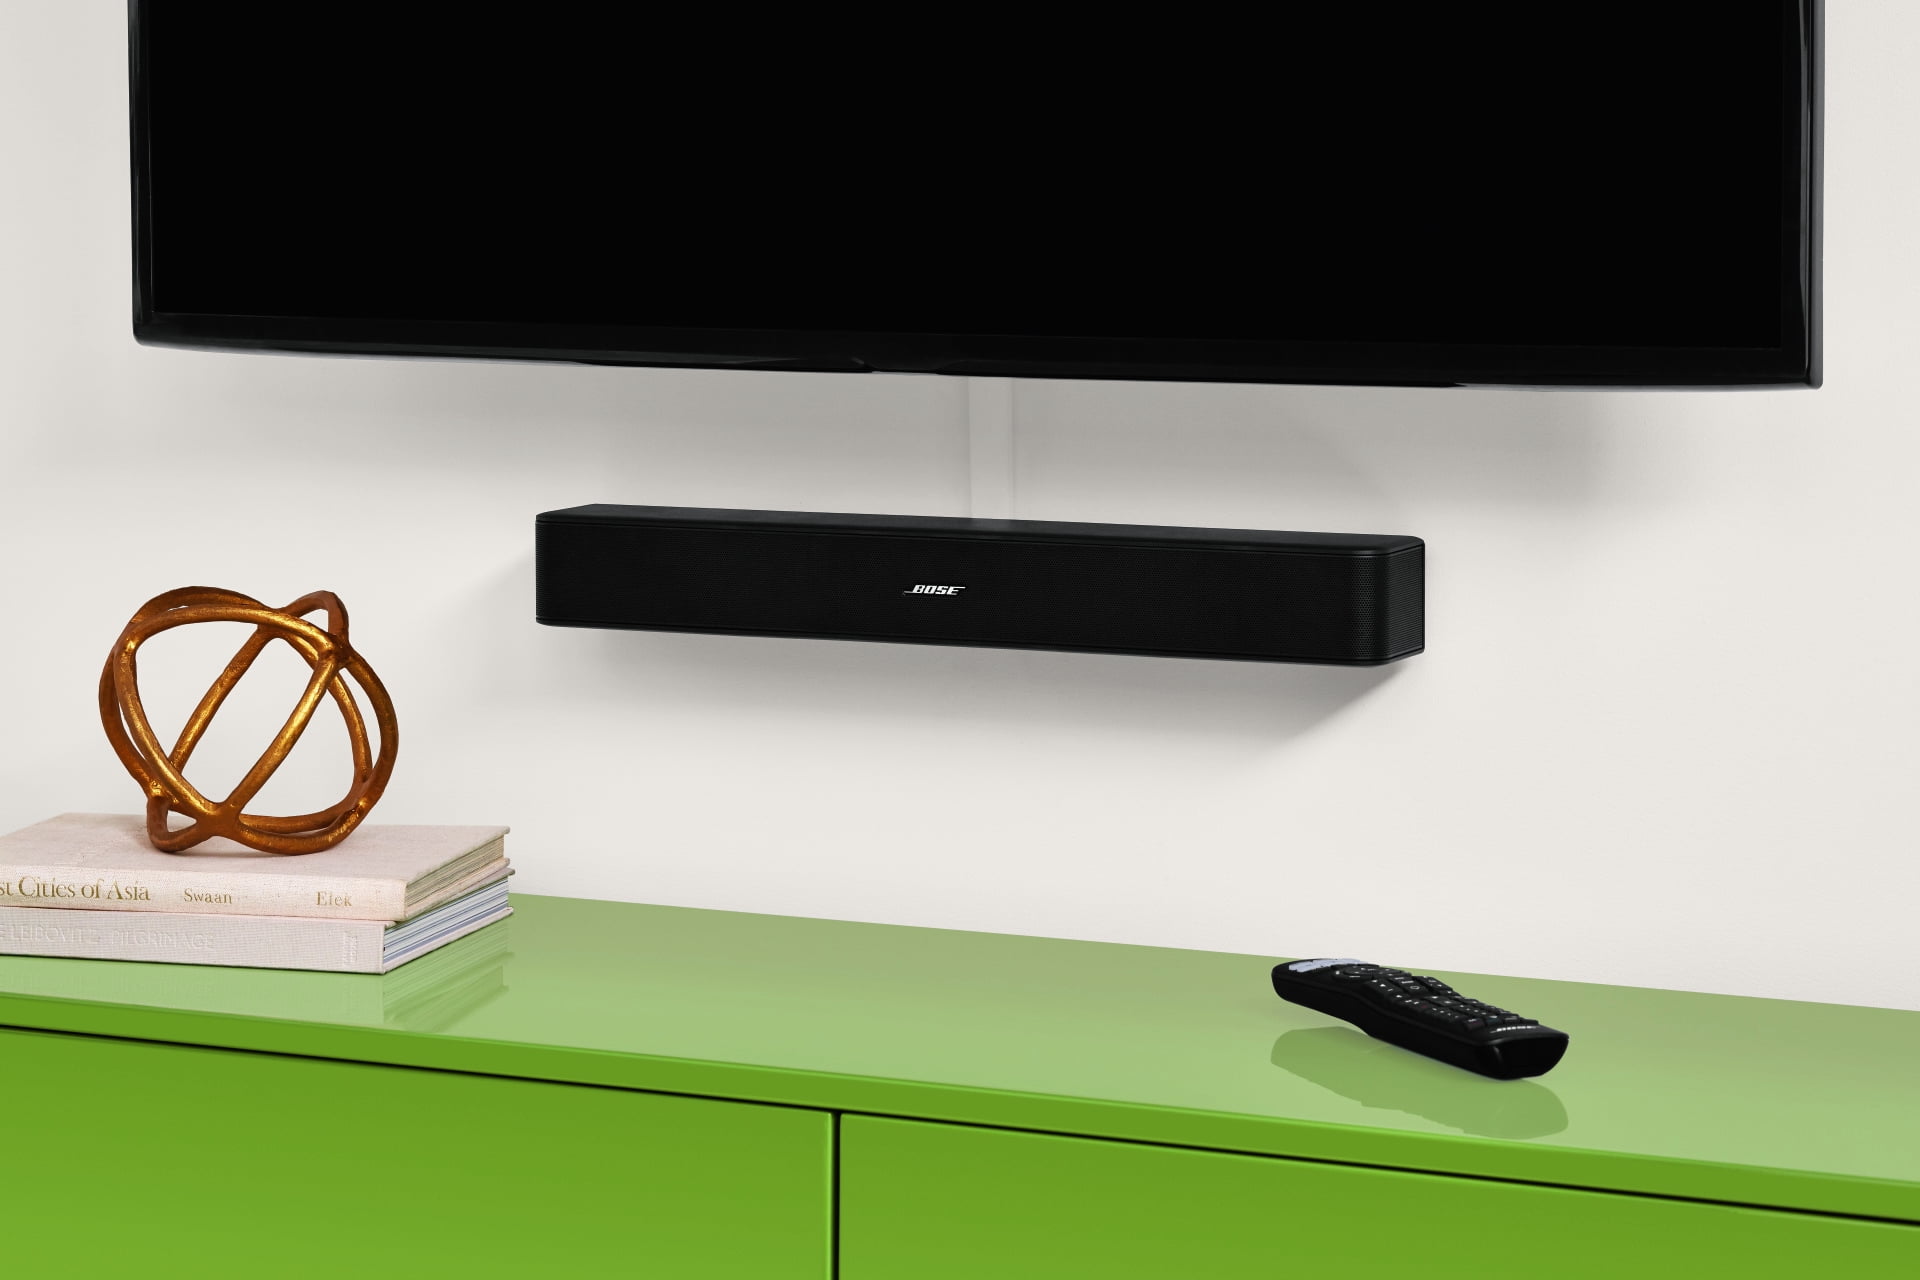 Bose Solo 5 Soundbar Wireless Bluetooth TV Speaker - Walmart.com